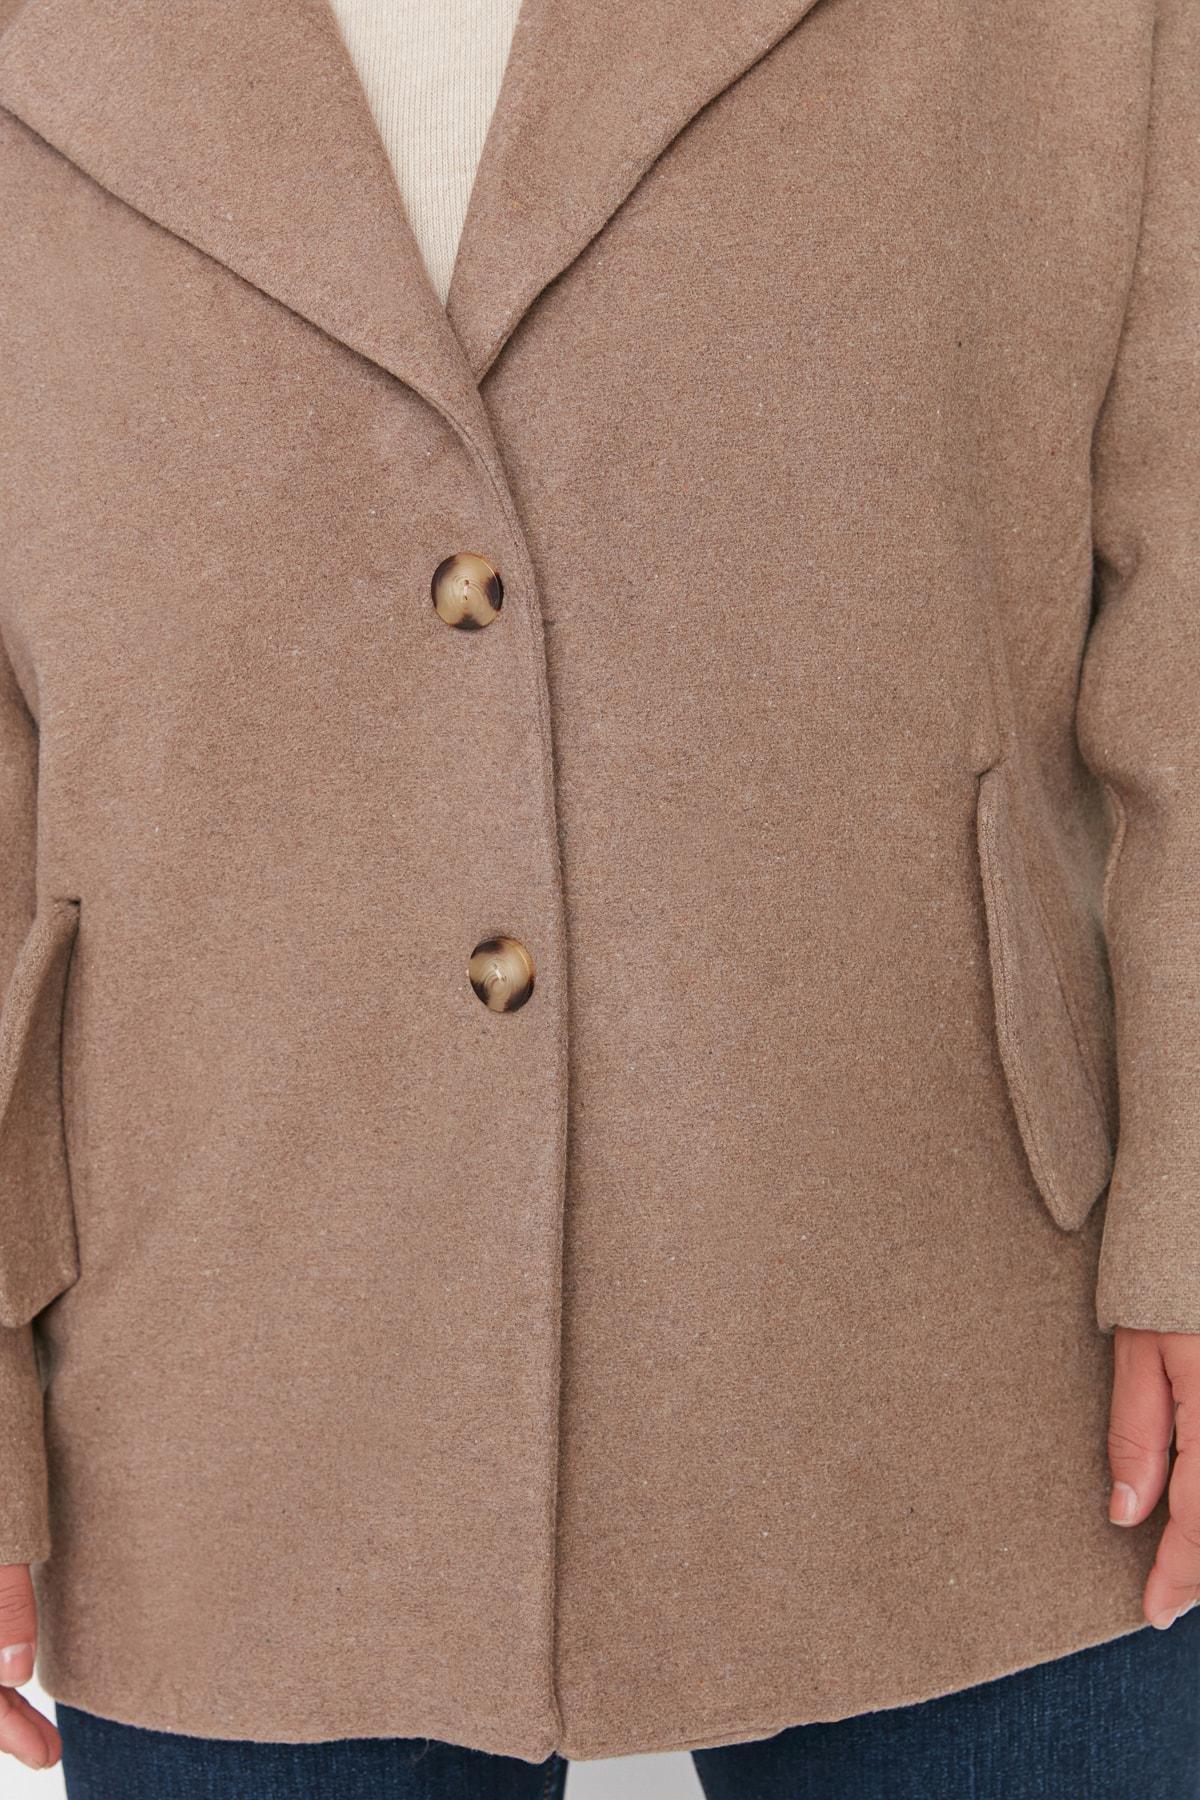 Trendyol - Brown Double Plus Size Coat